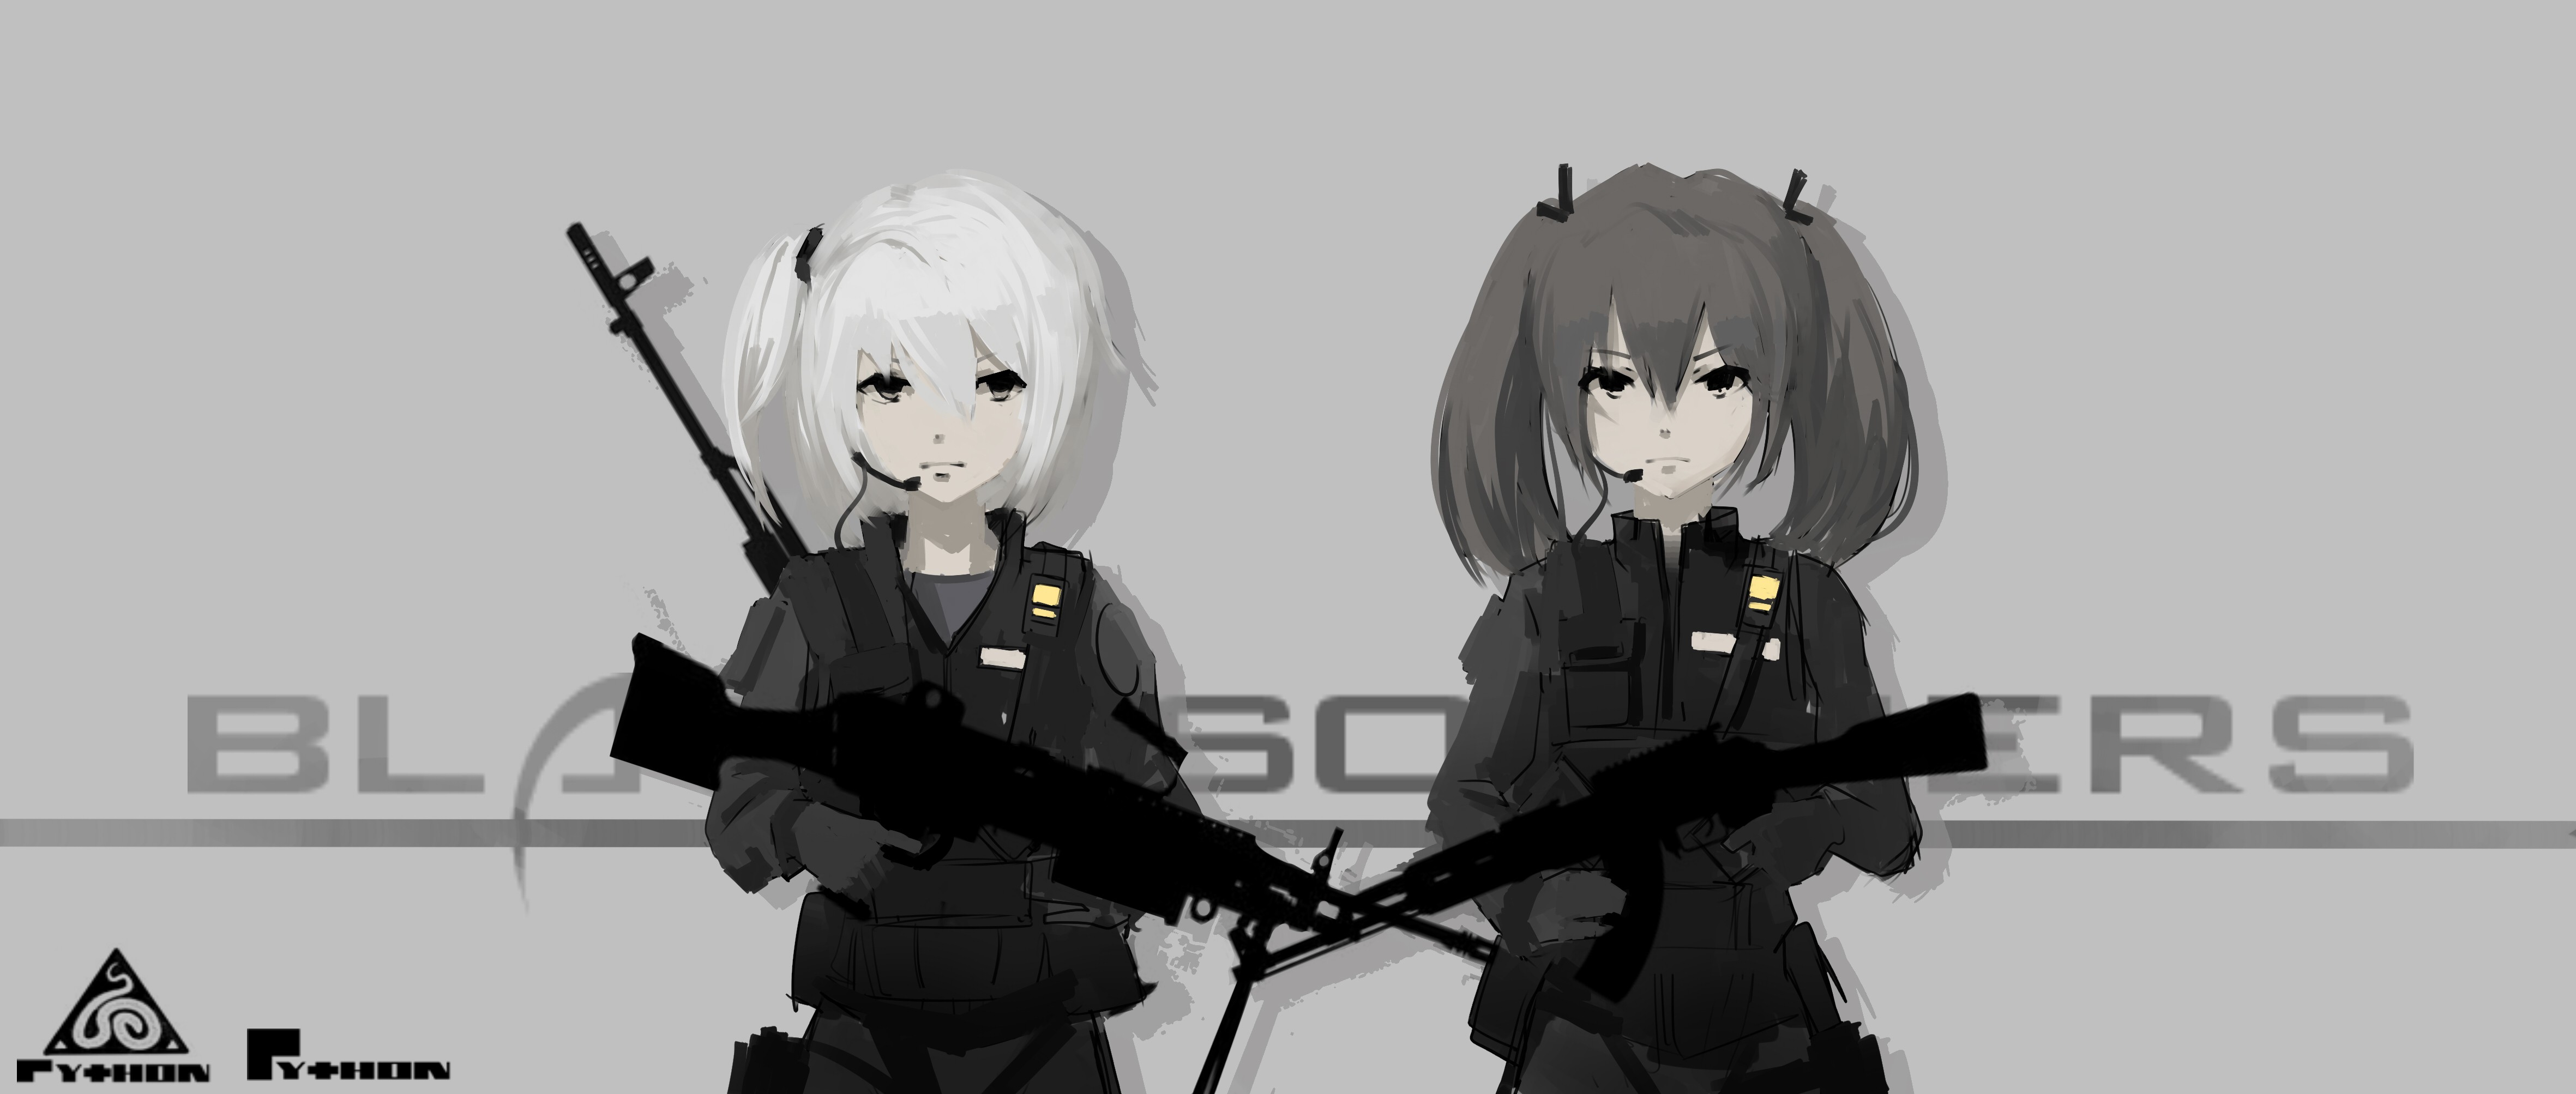 Anime 4724x2007 anime anime girls weapon gun uniform short hair white hair gray hair Black Soldier two women Pixiv girls with guns machine gun long hair